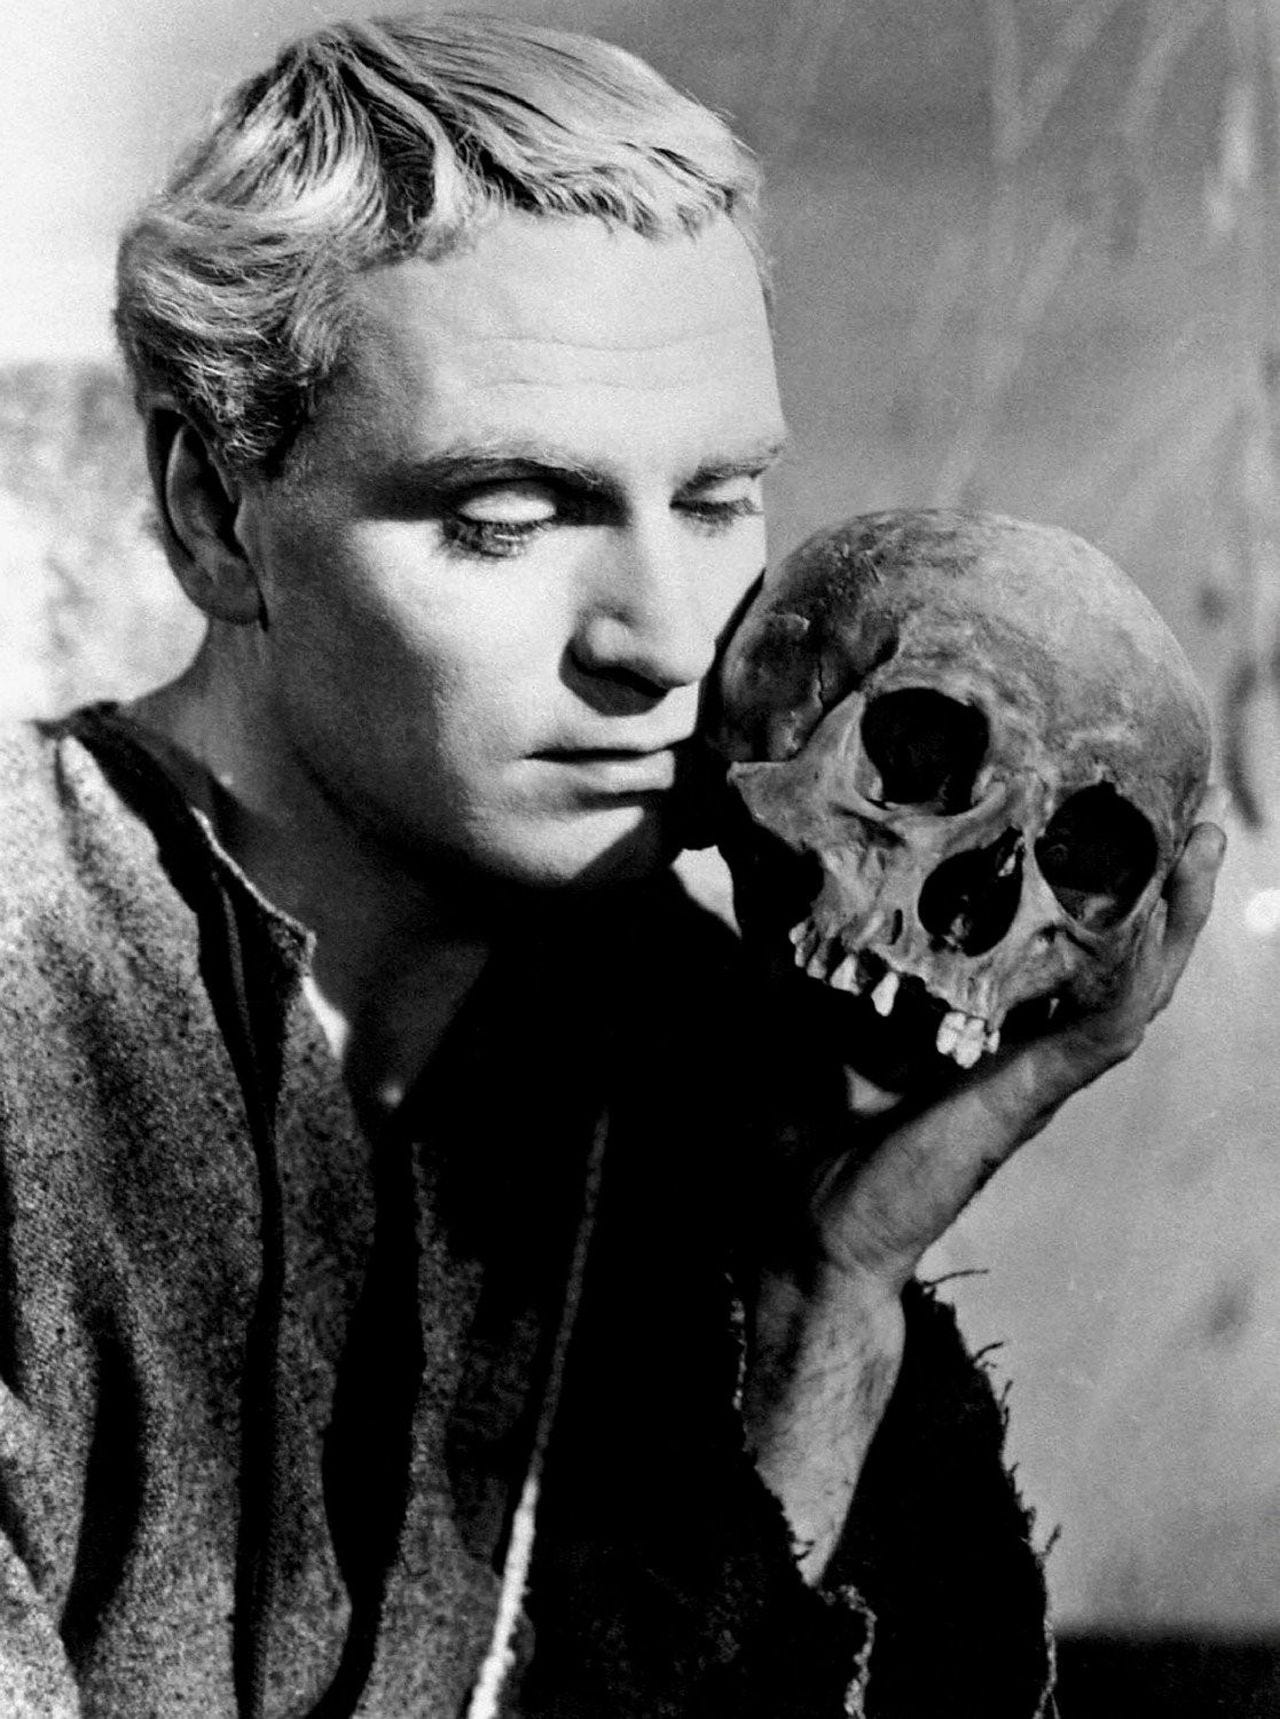 Alas, poor Yorick! British archaeologists find William Shakespeare's skull  missing from grave - masslive.com